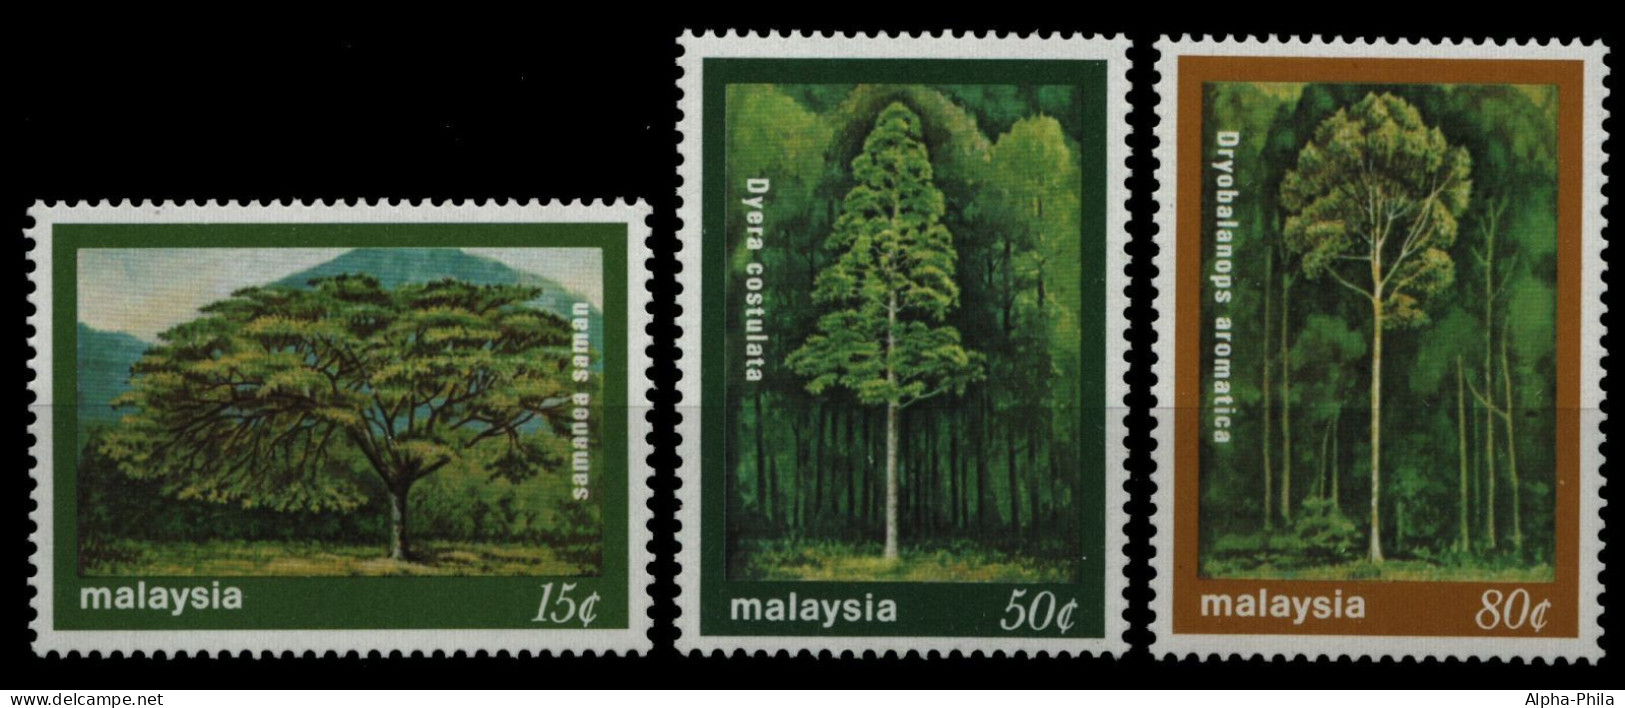 Malaysia 1981 - Mi-Nr. 231-236 ** - MNH - Bäume / Trees - Malaysia (1964-...)